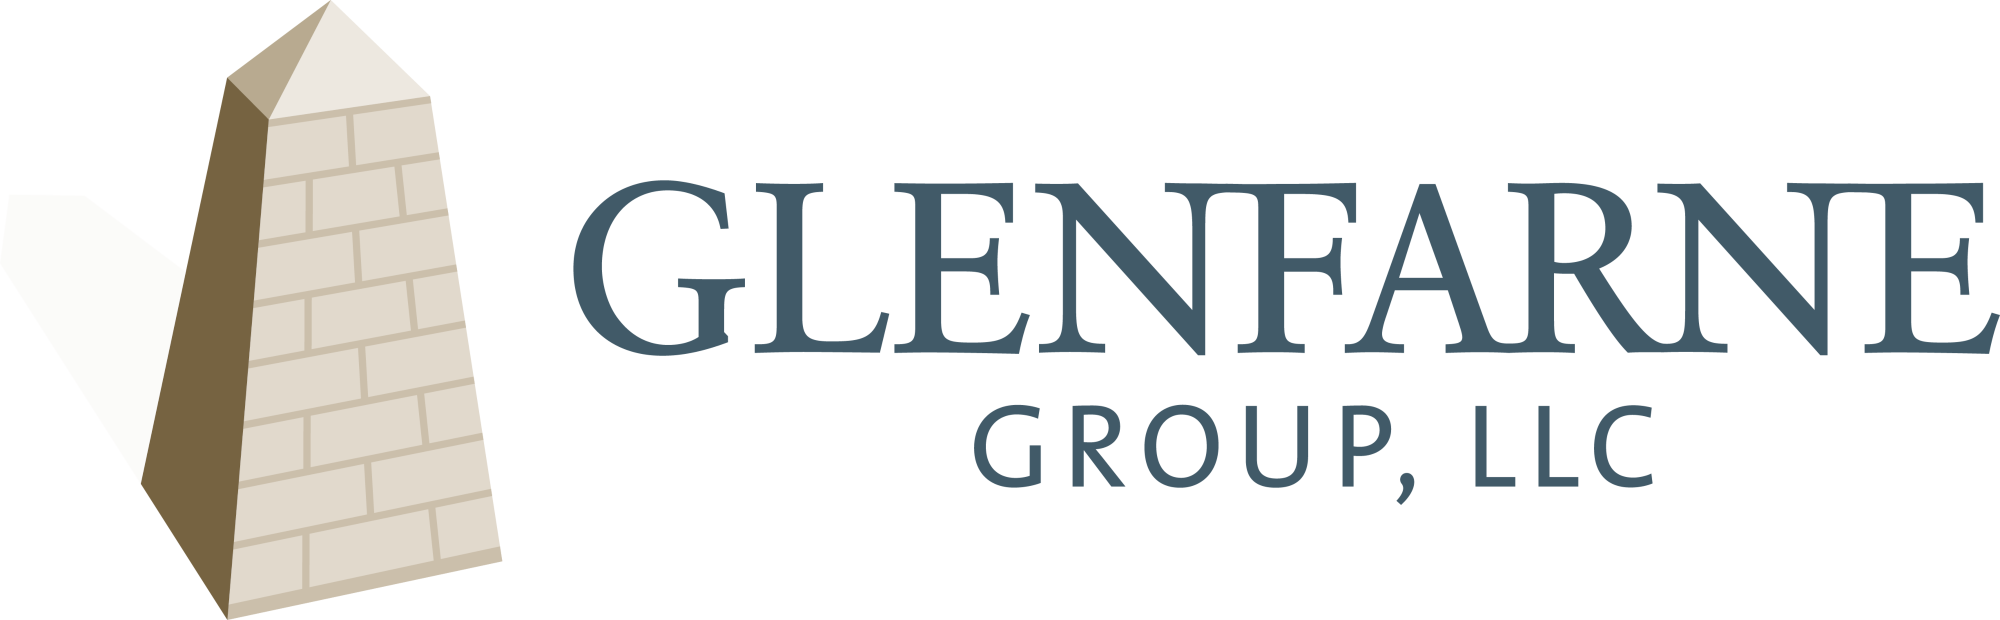 Glenfarne Group, LLC